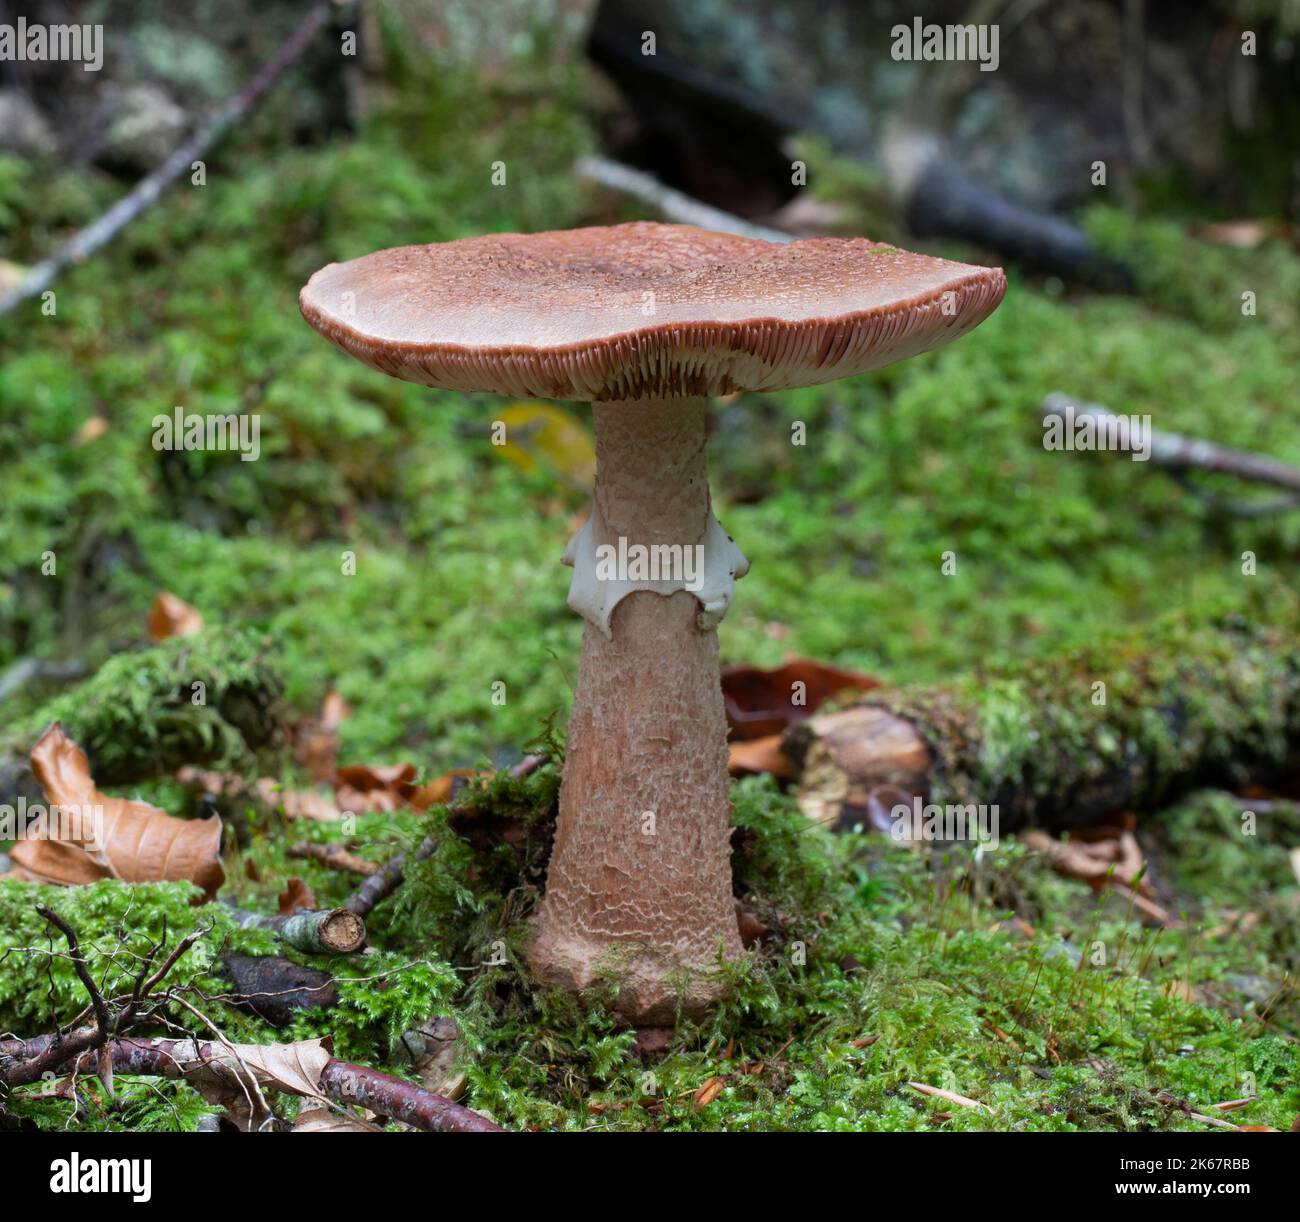 Blusher Mushroom - Amanita. A. rubescens Stock Photo